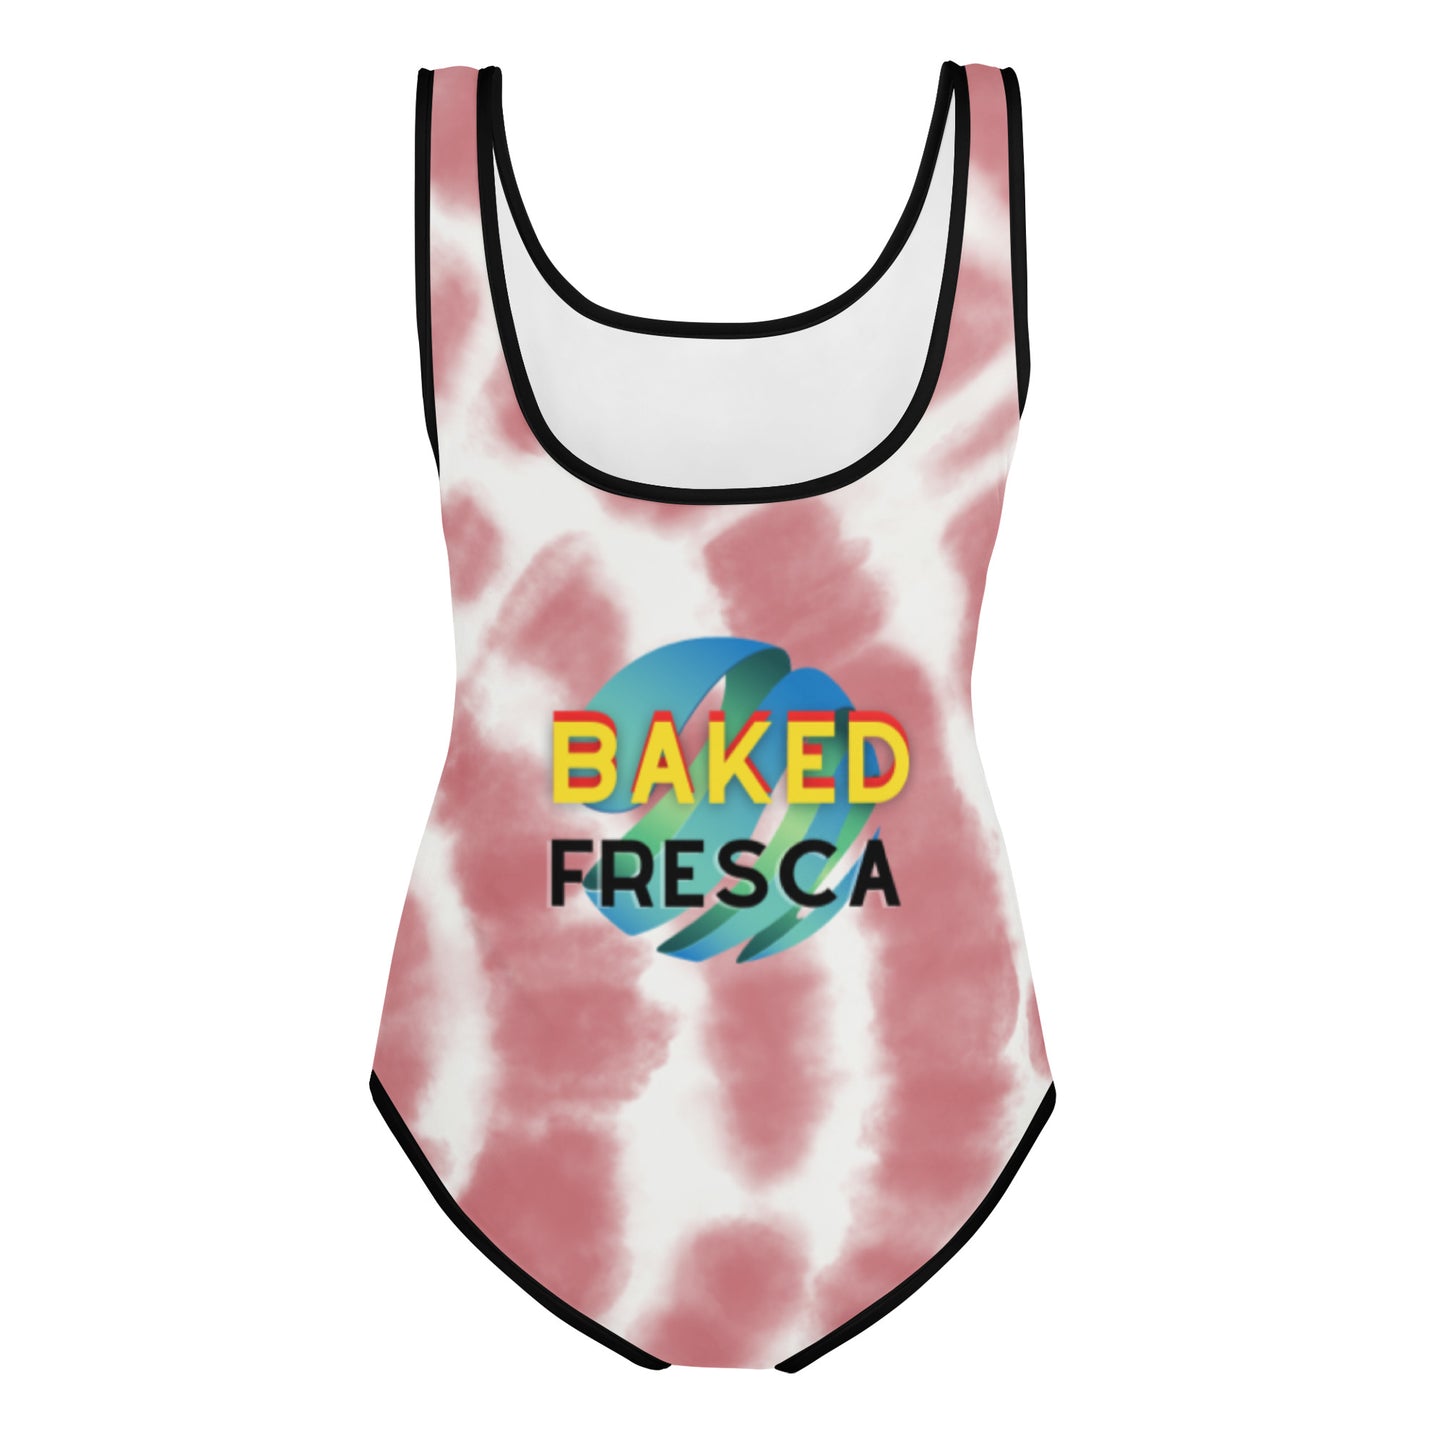 90's Tie Dye Youth Swimsuit by Baked Fresca